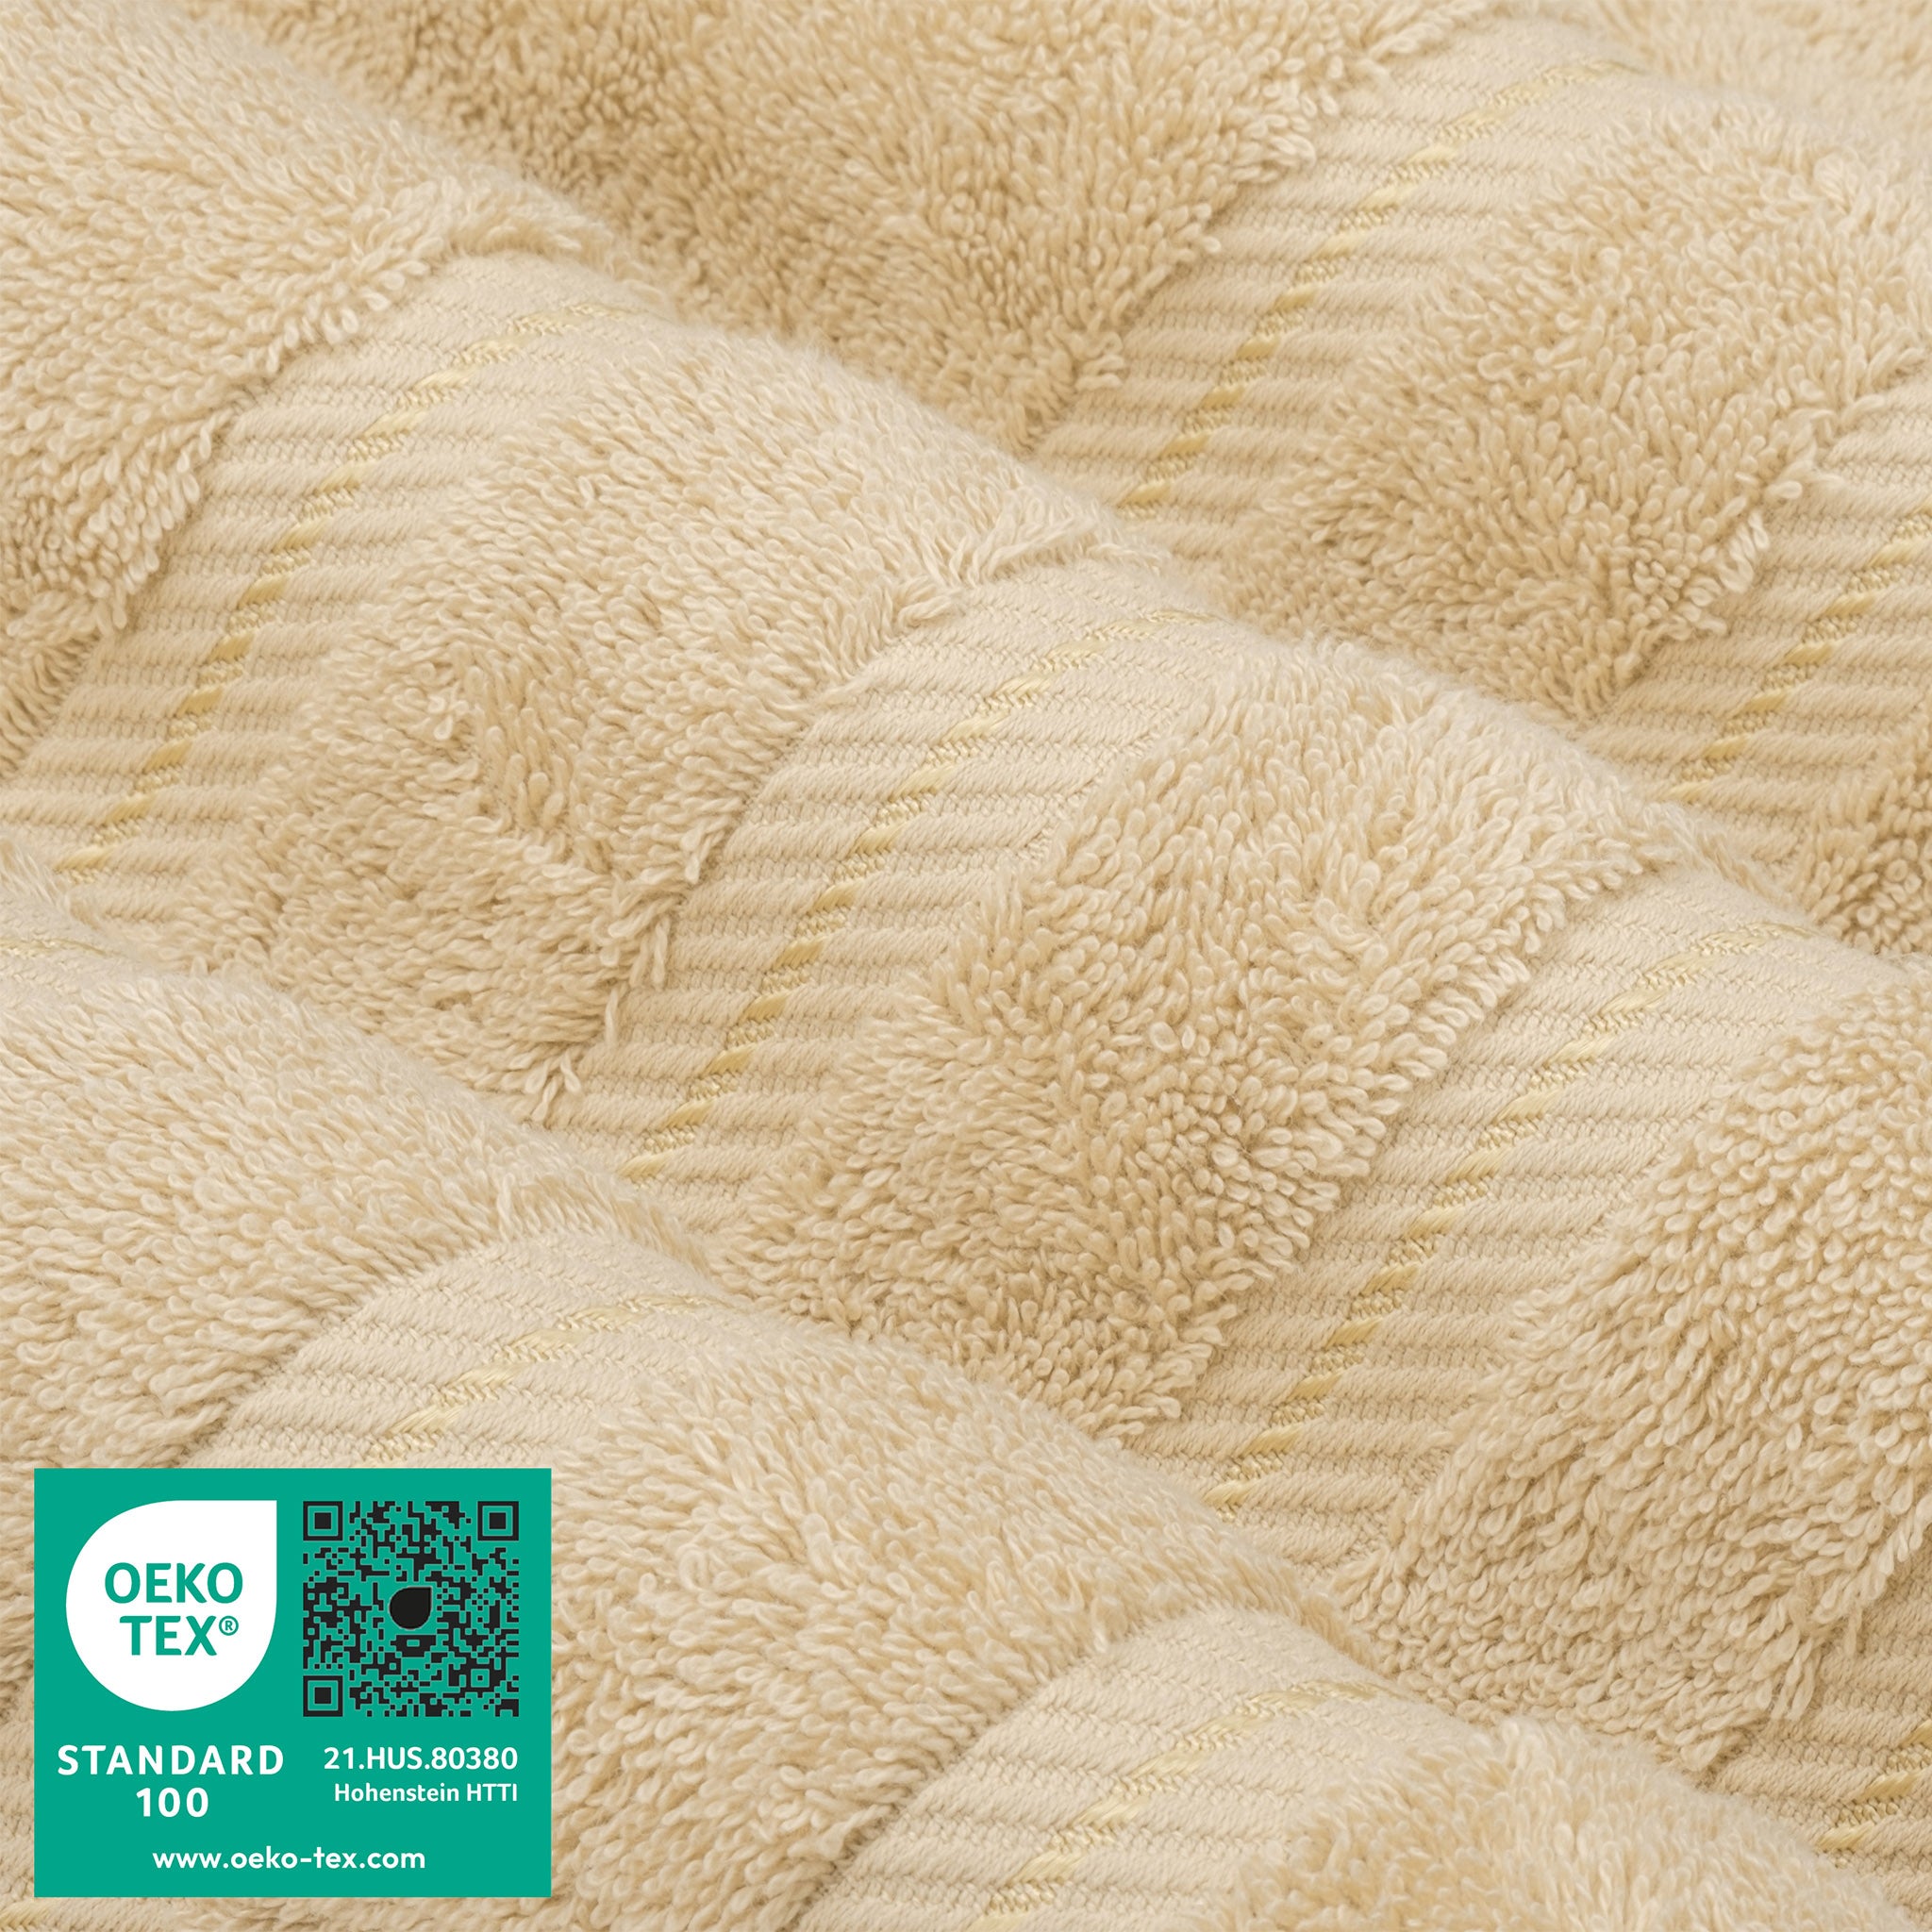 American Soft Linen 100% Turkish Cotton 6 Piece Towel Set Wholesale sand-taupe-3